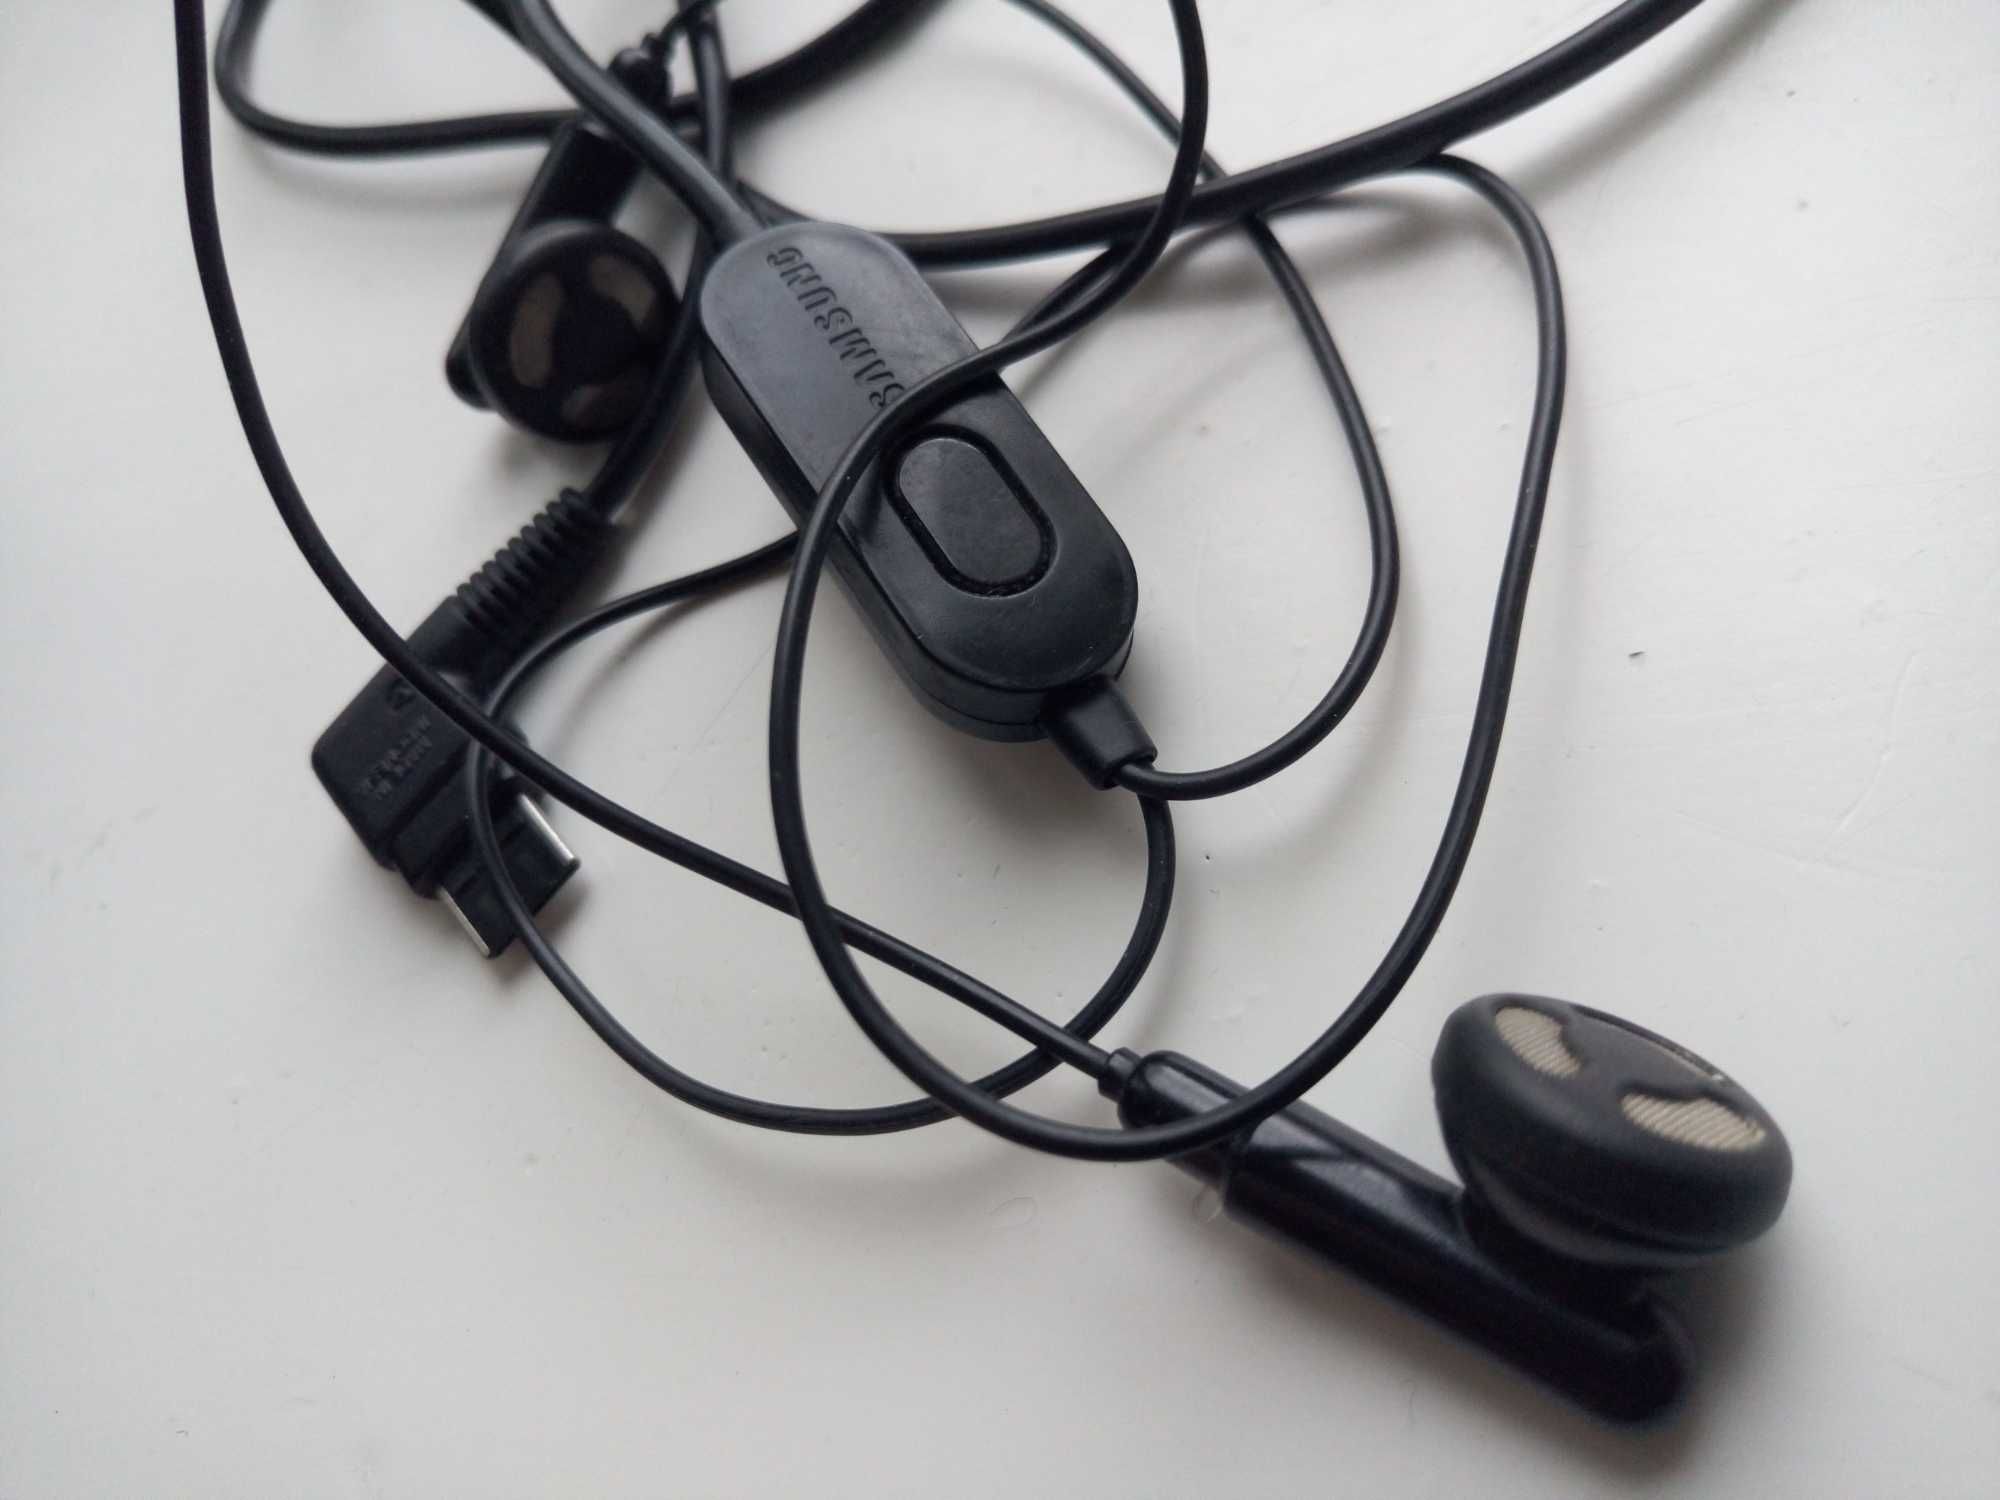 USB кабель Samsung,наушники,переходники шнуры